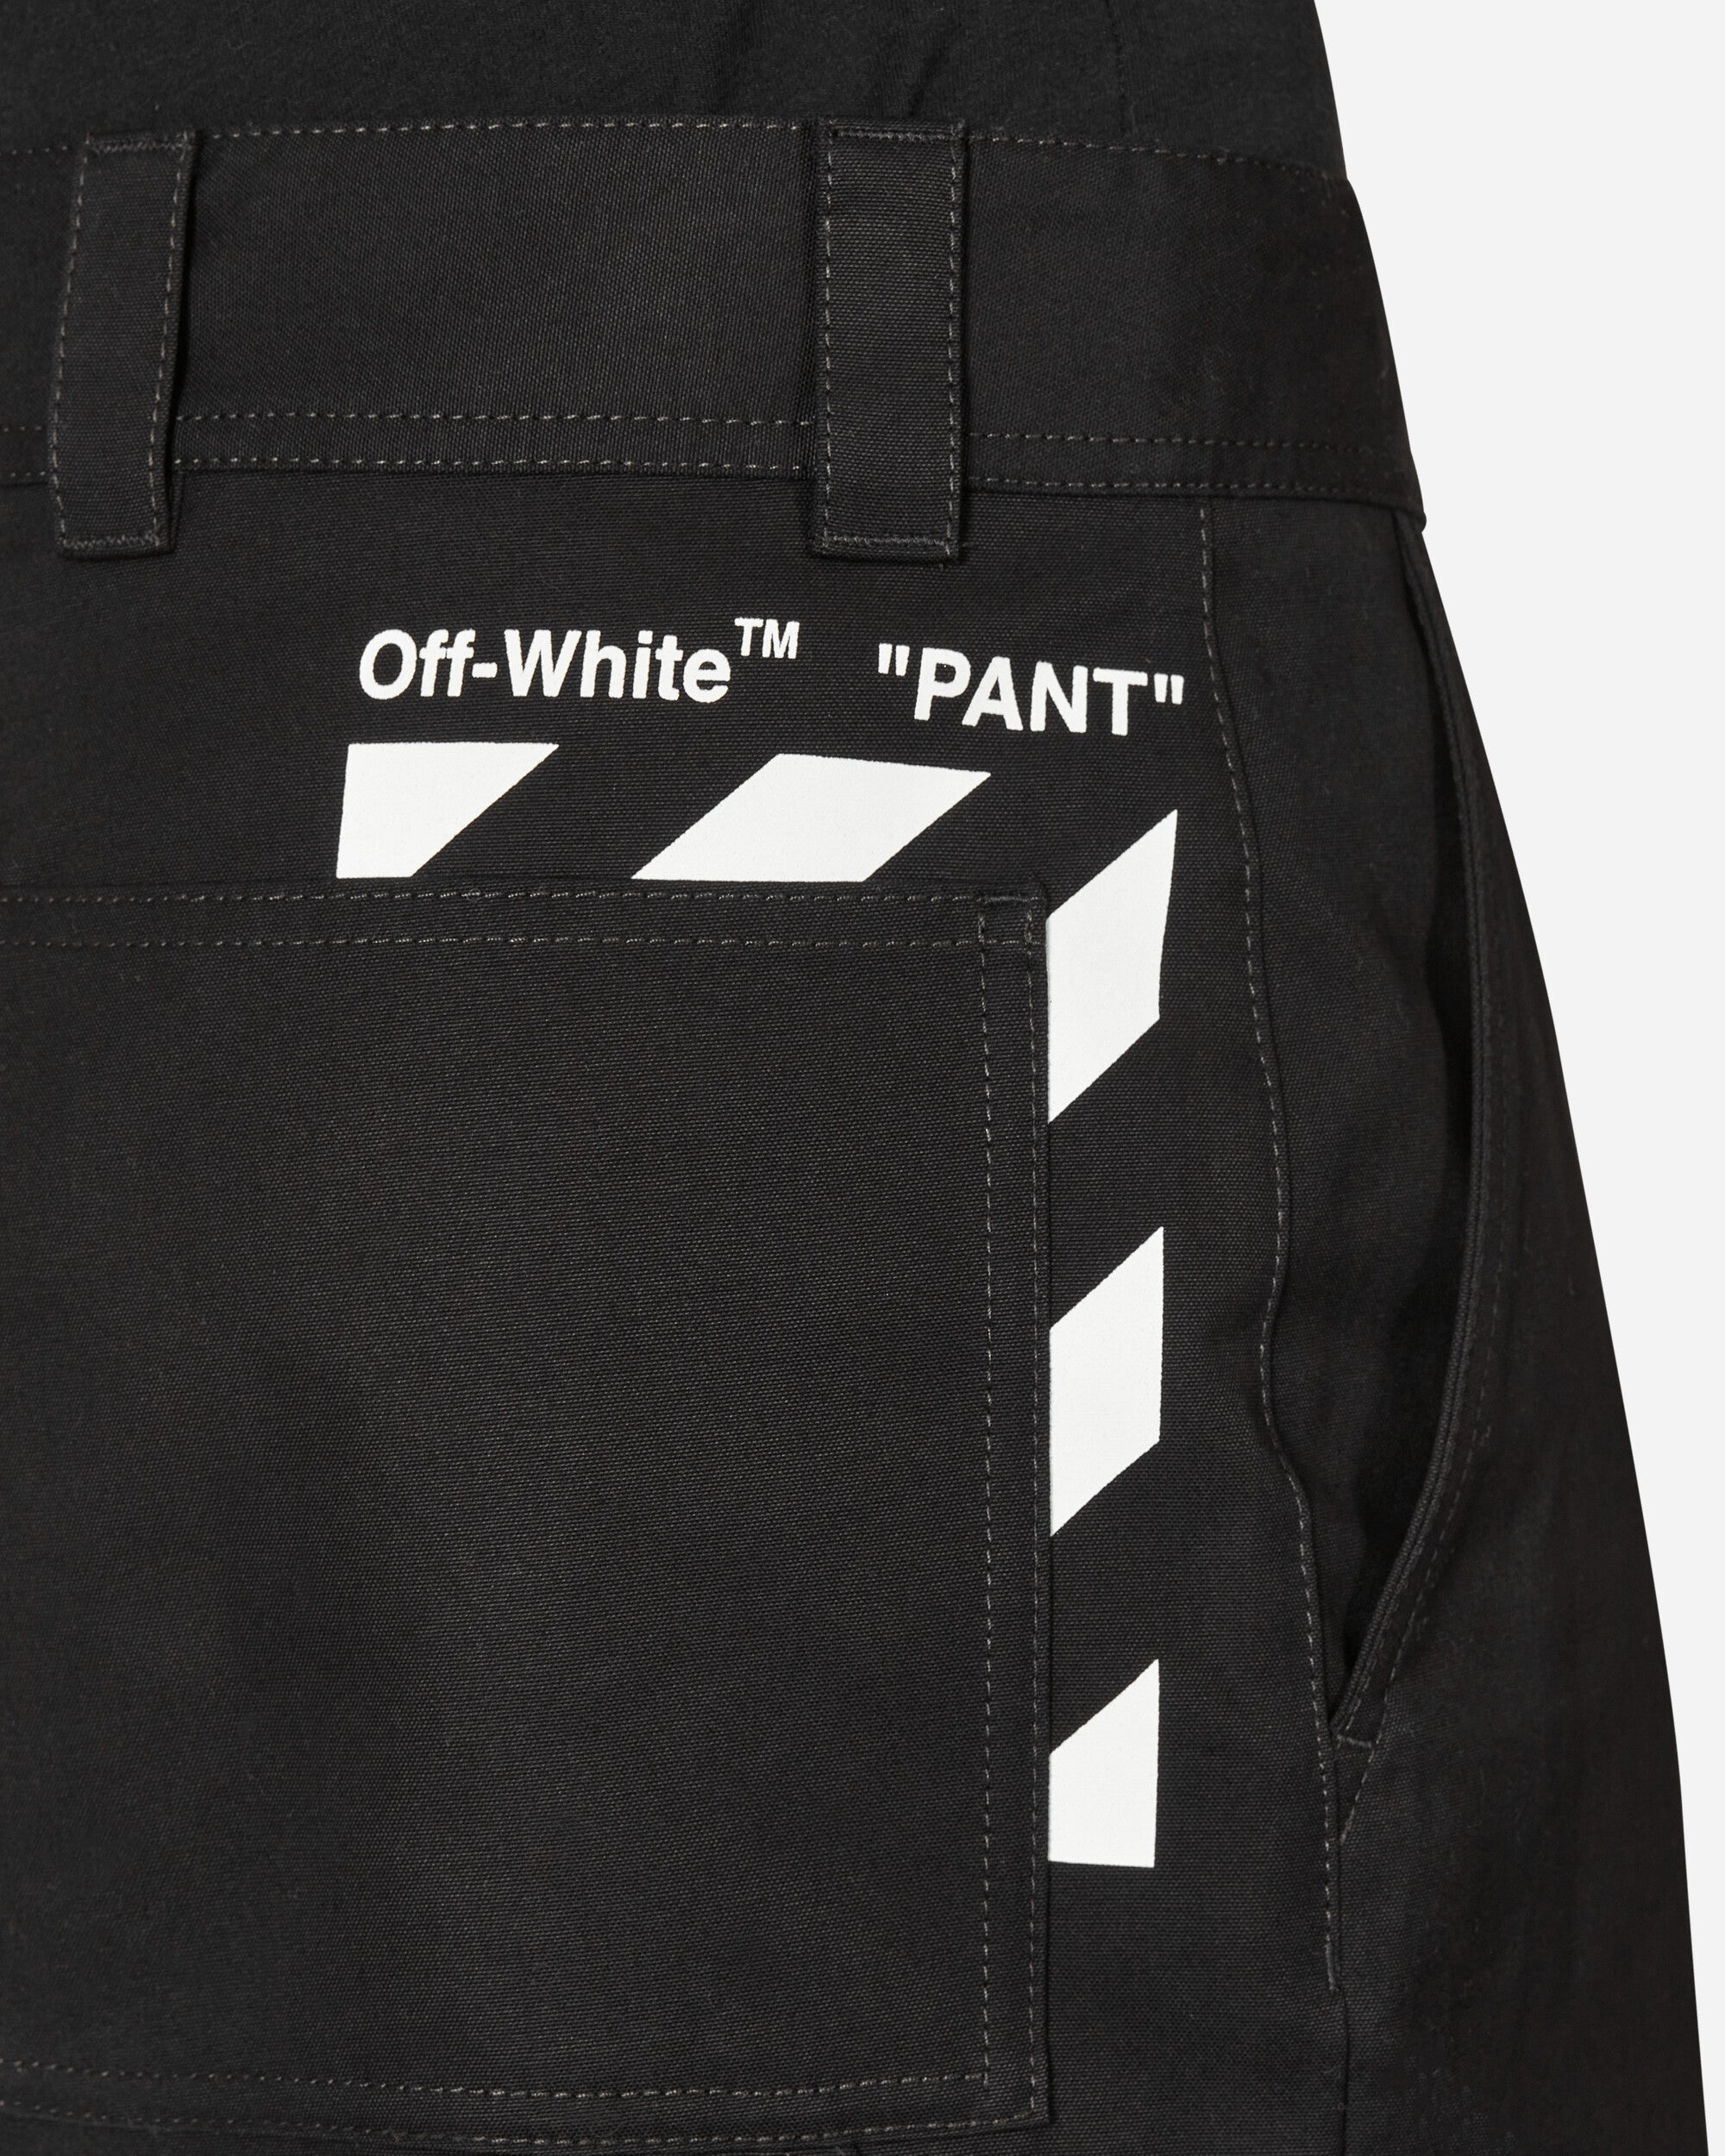 Off-White Diagonal Pocket Carpenter Pant Black/White Shorts Cargo Short OMCA207C99FAB001 1001